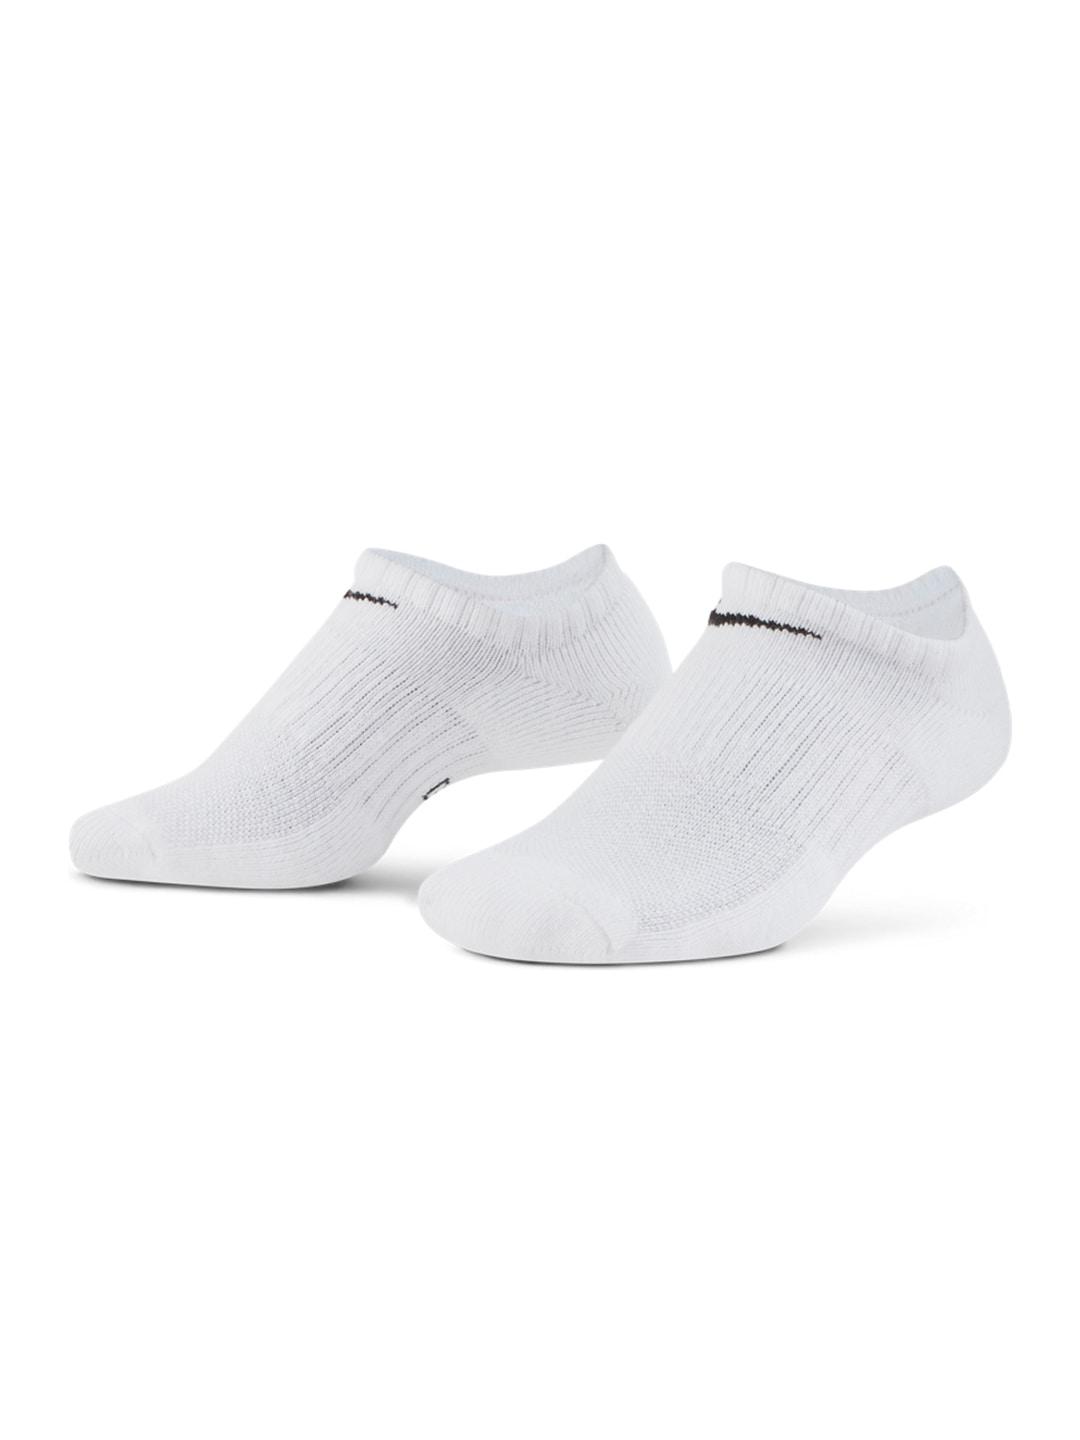 nike-unisex-pack-of-3-white-everyday-cush-ns-training-ankle-length-socks